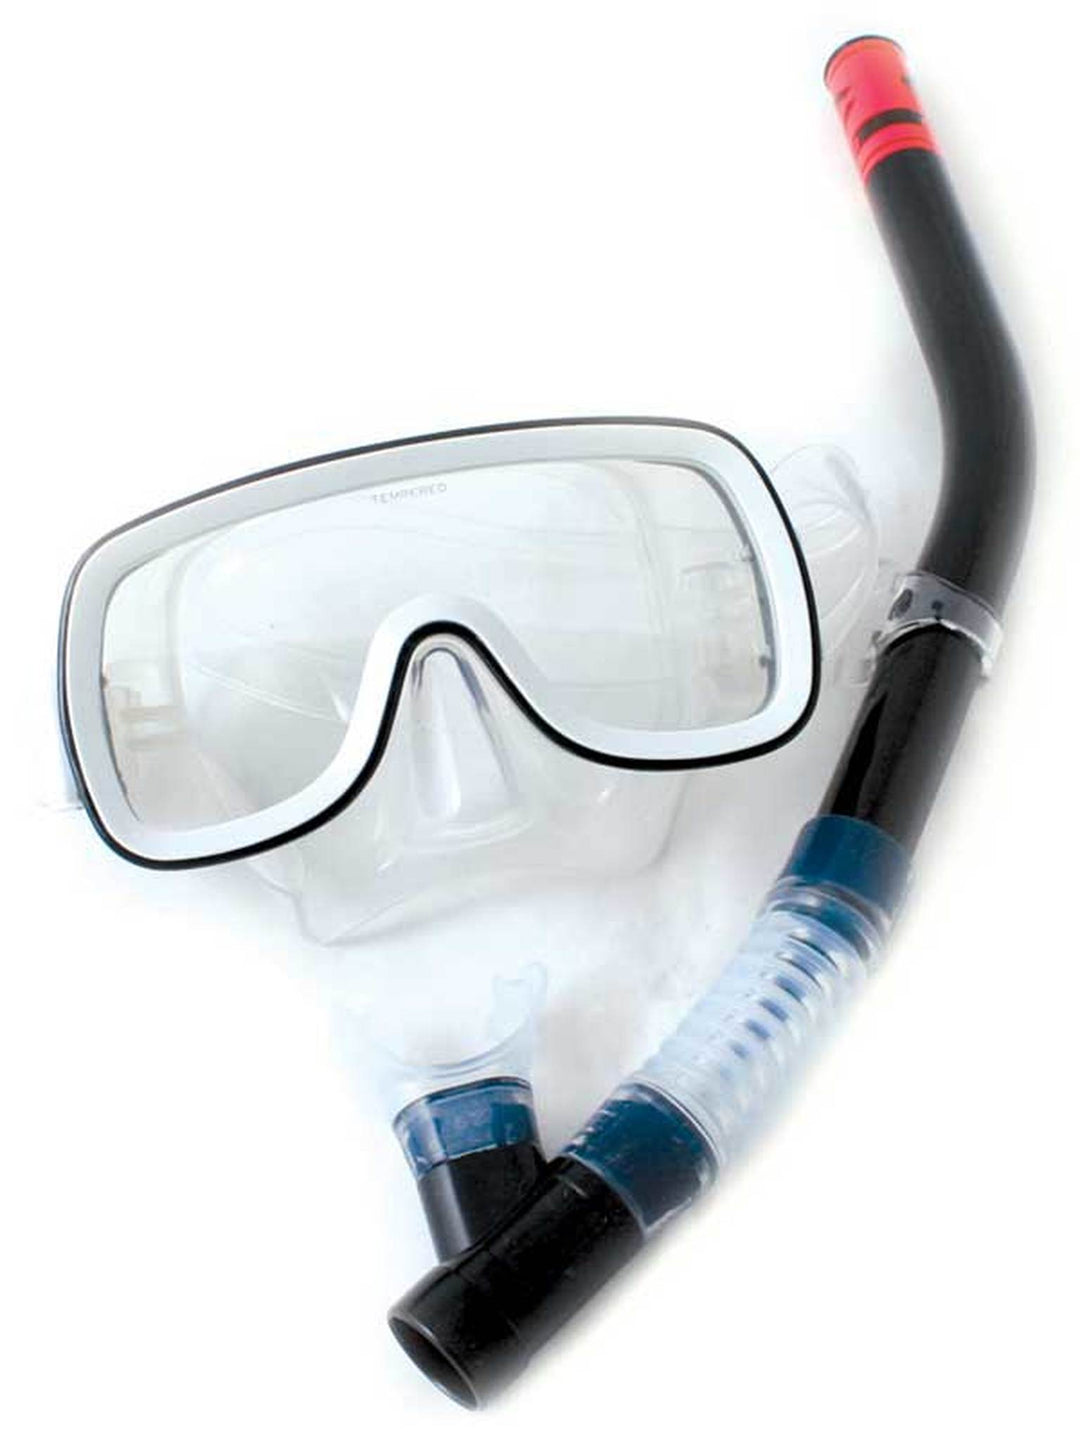 Silicon Mask & Snorkel - Ocean & Earth WA